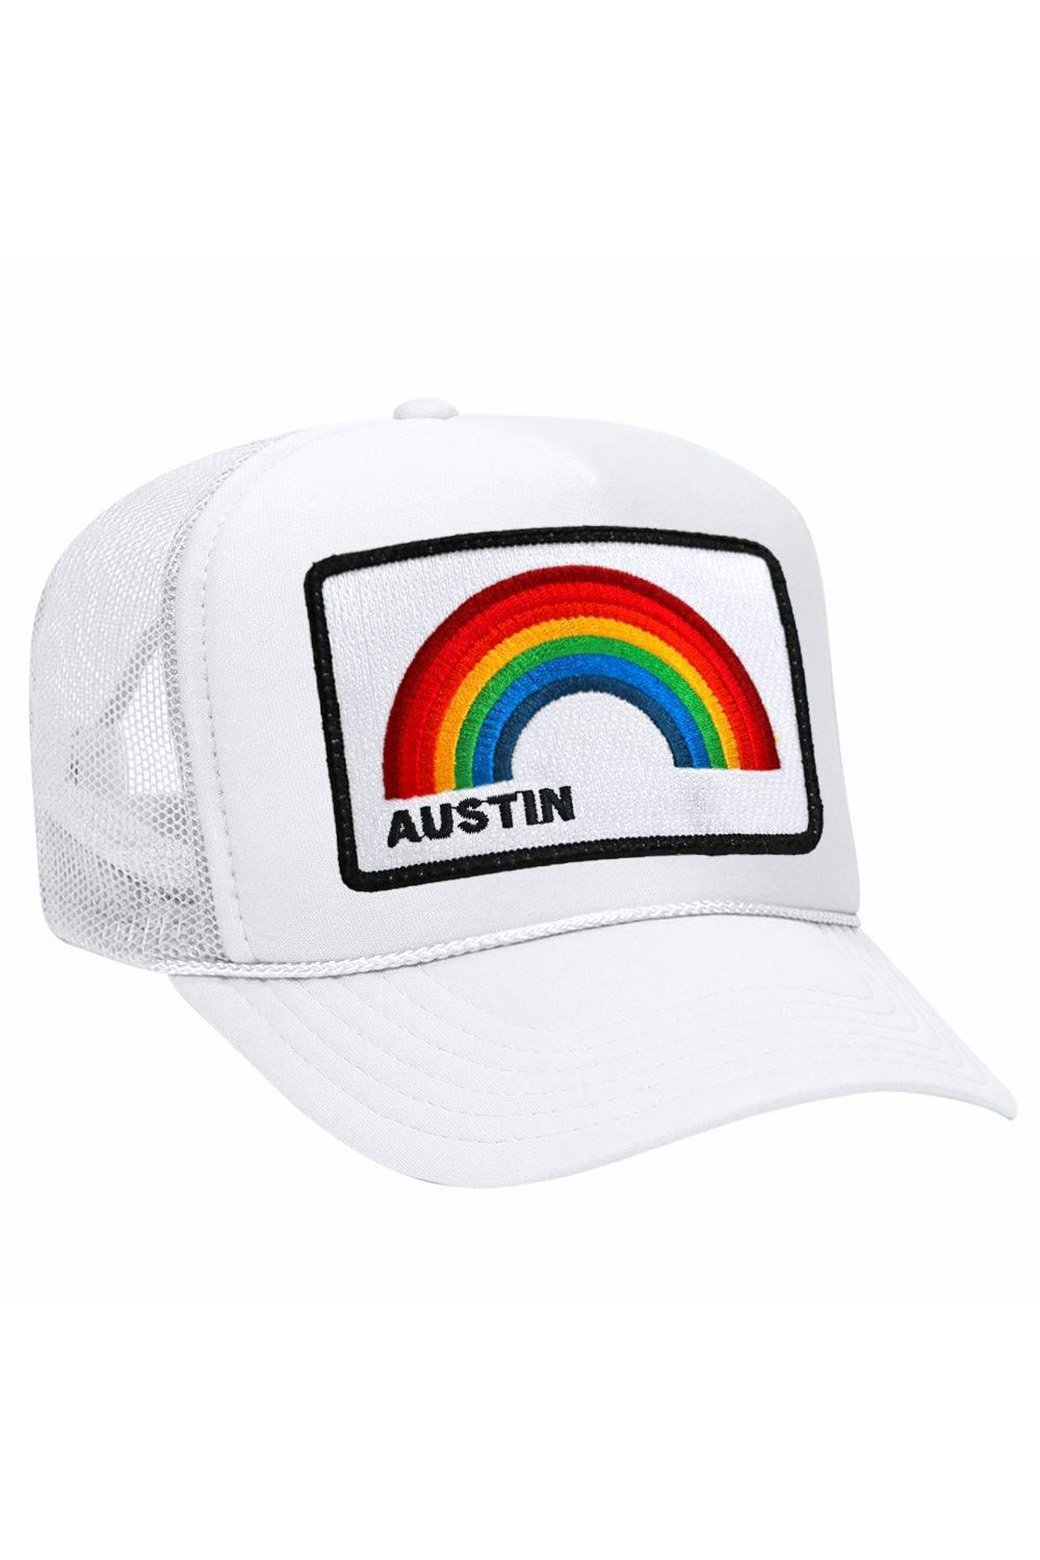 AUSTIN RAINBOW TRUCKER HAT HATS Aviator Nation OS WHITE 